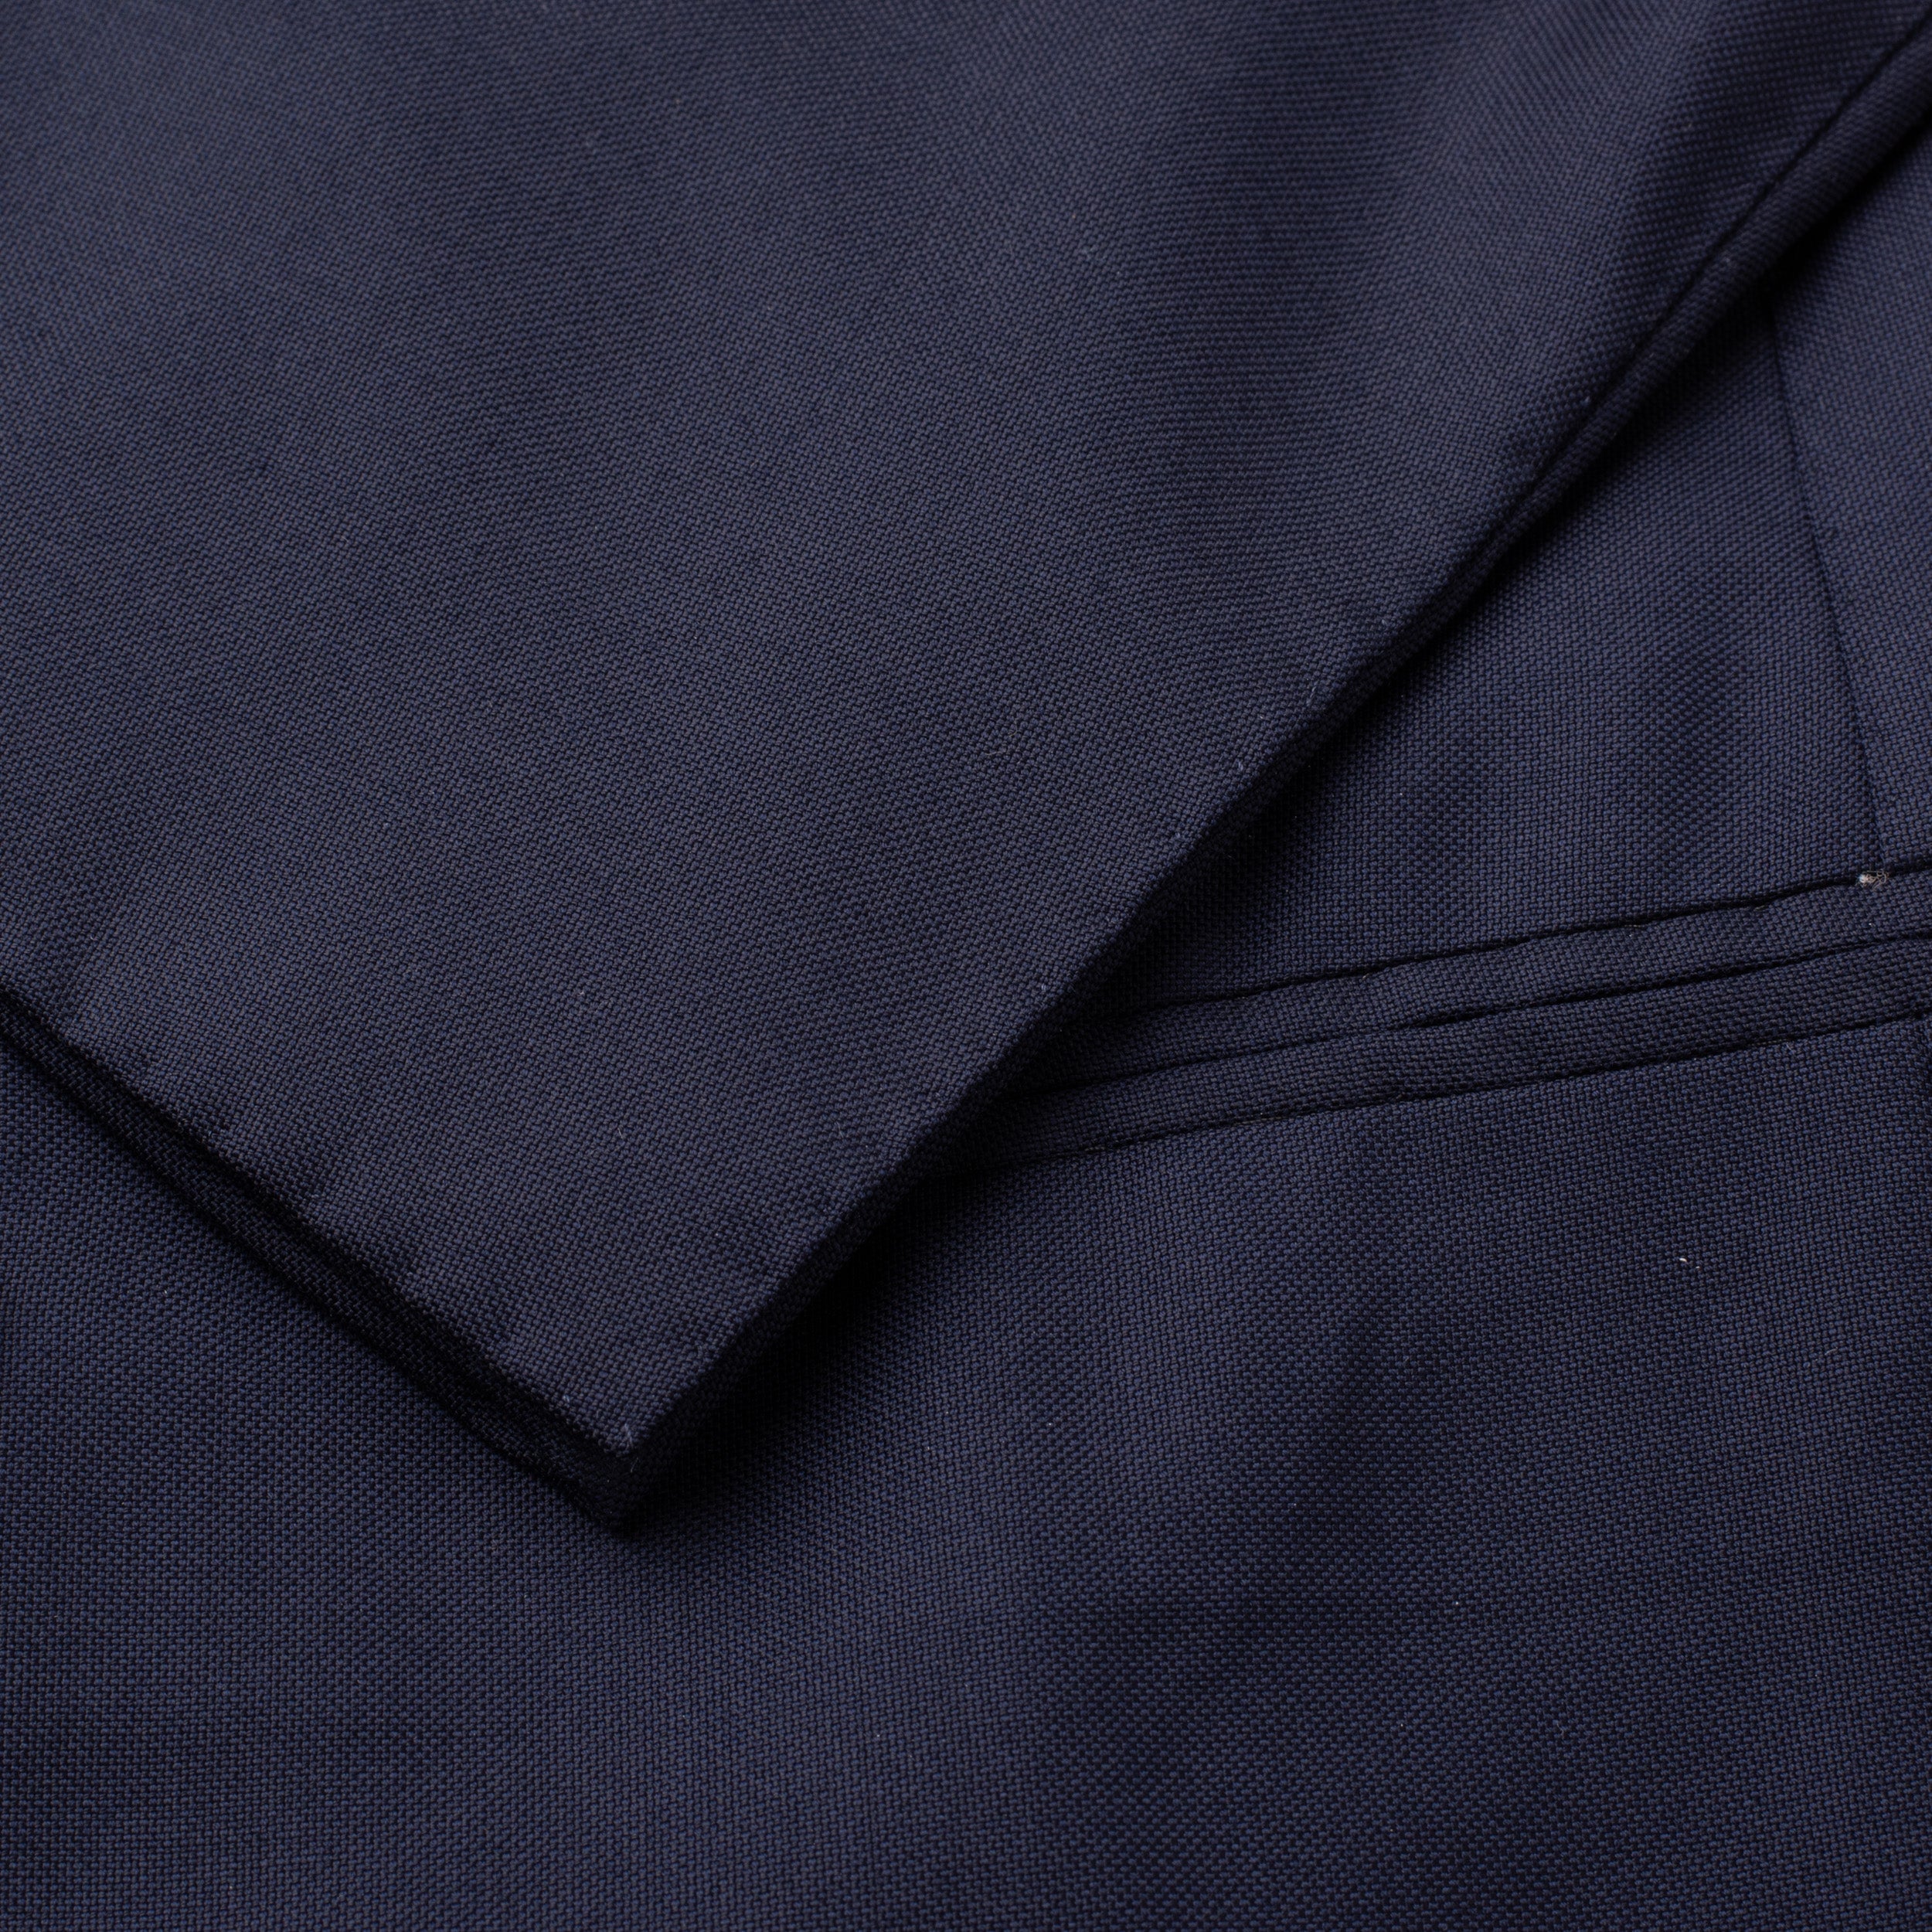 Sartoria CHIAIA Bespoke Handmade Navy Blue Wool DB Jacket EU 44 NEW US 34 SARTORIA CHIAIA